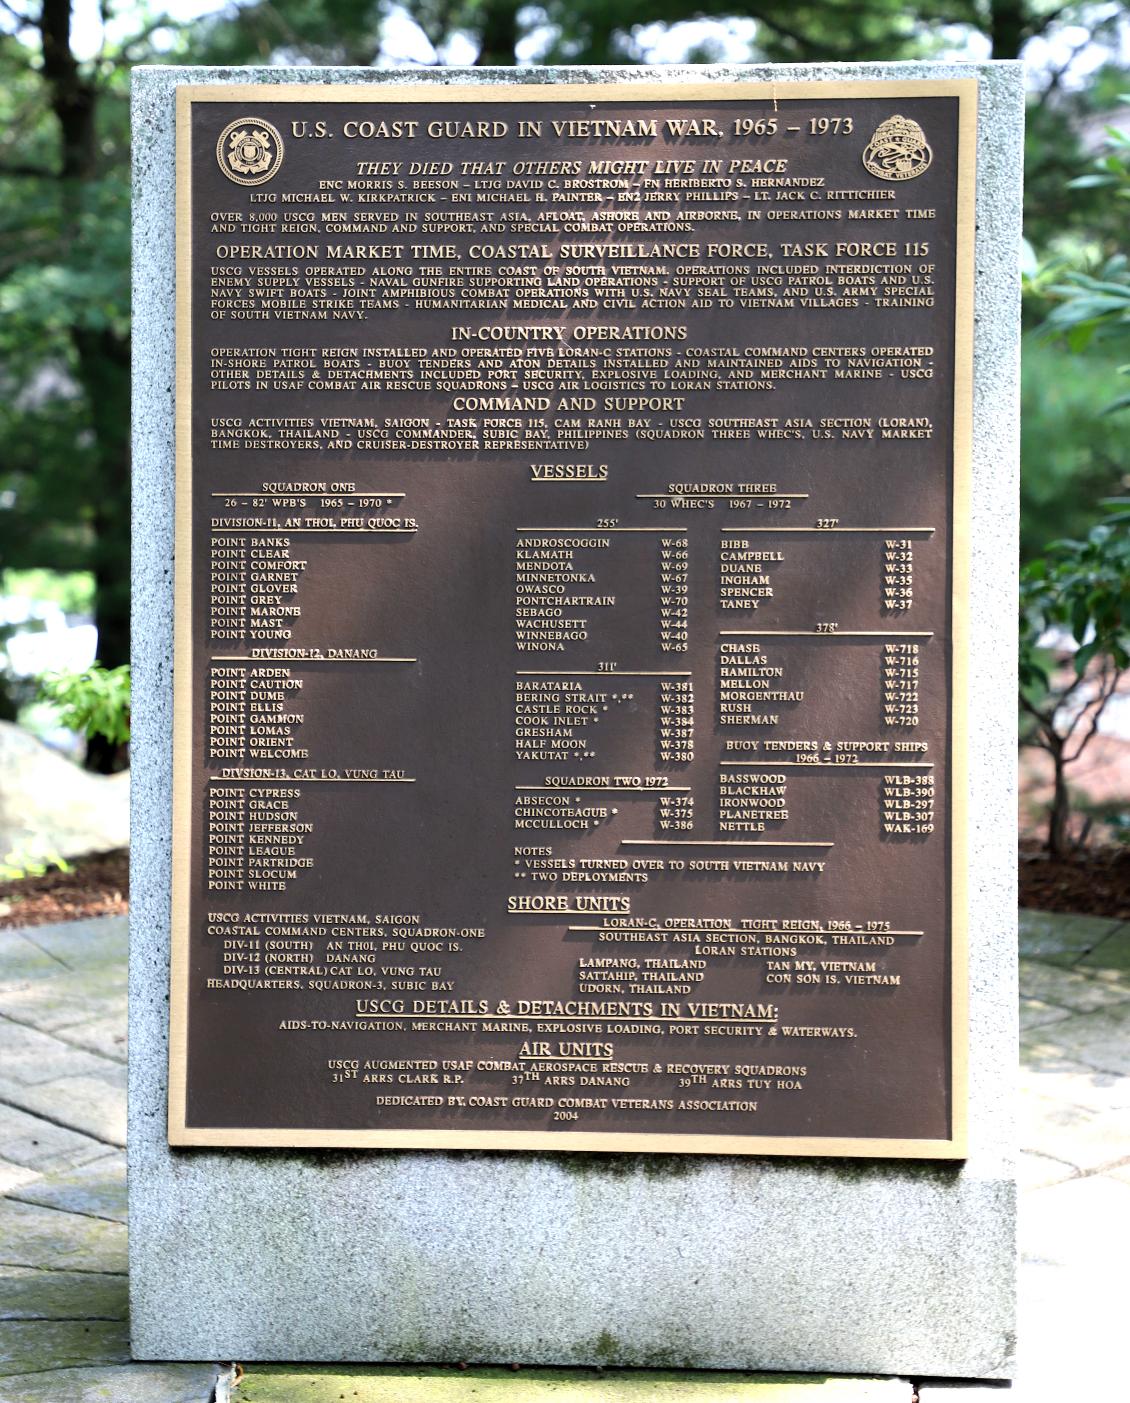 U.S. Coast Guard Academy - Vietnam War Memorial